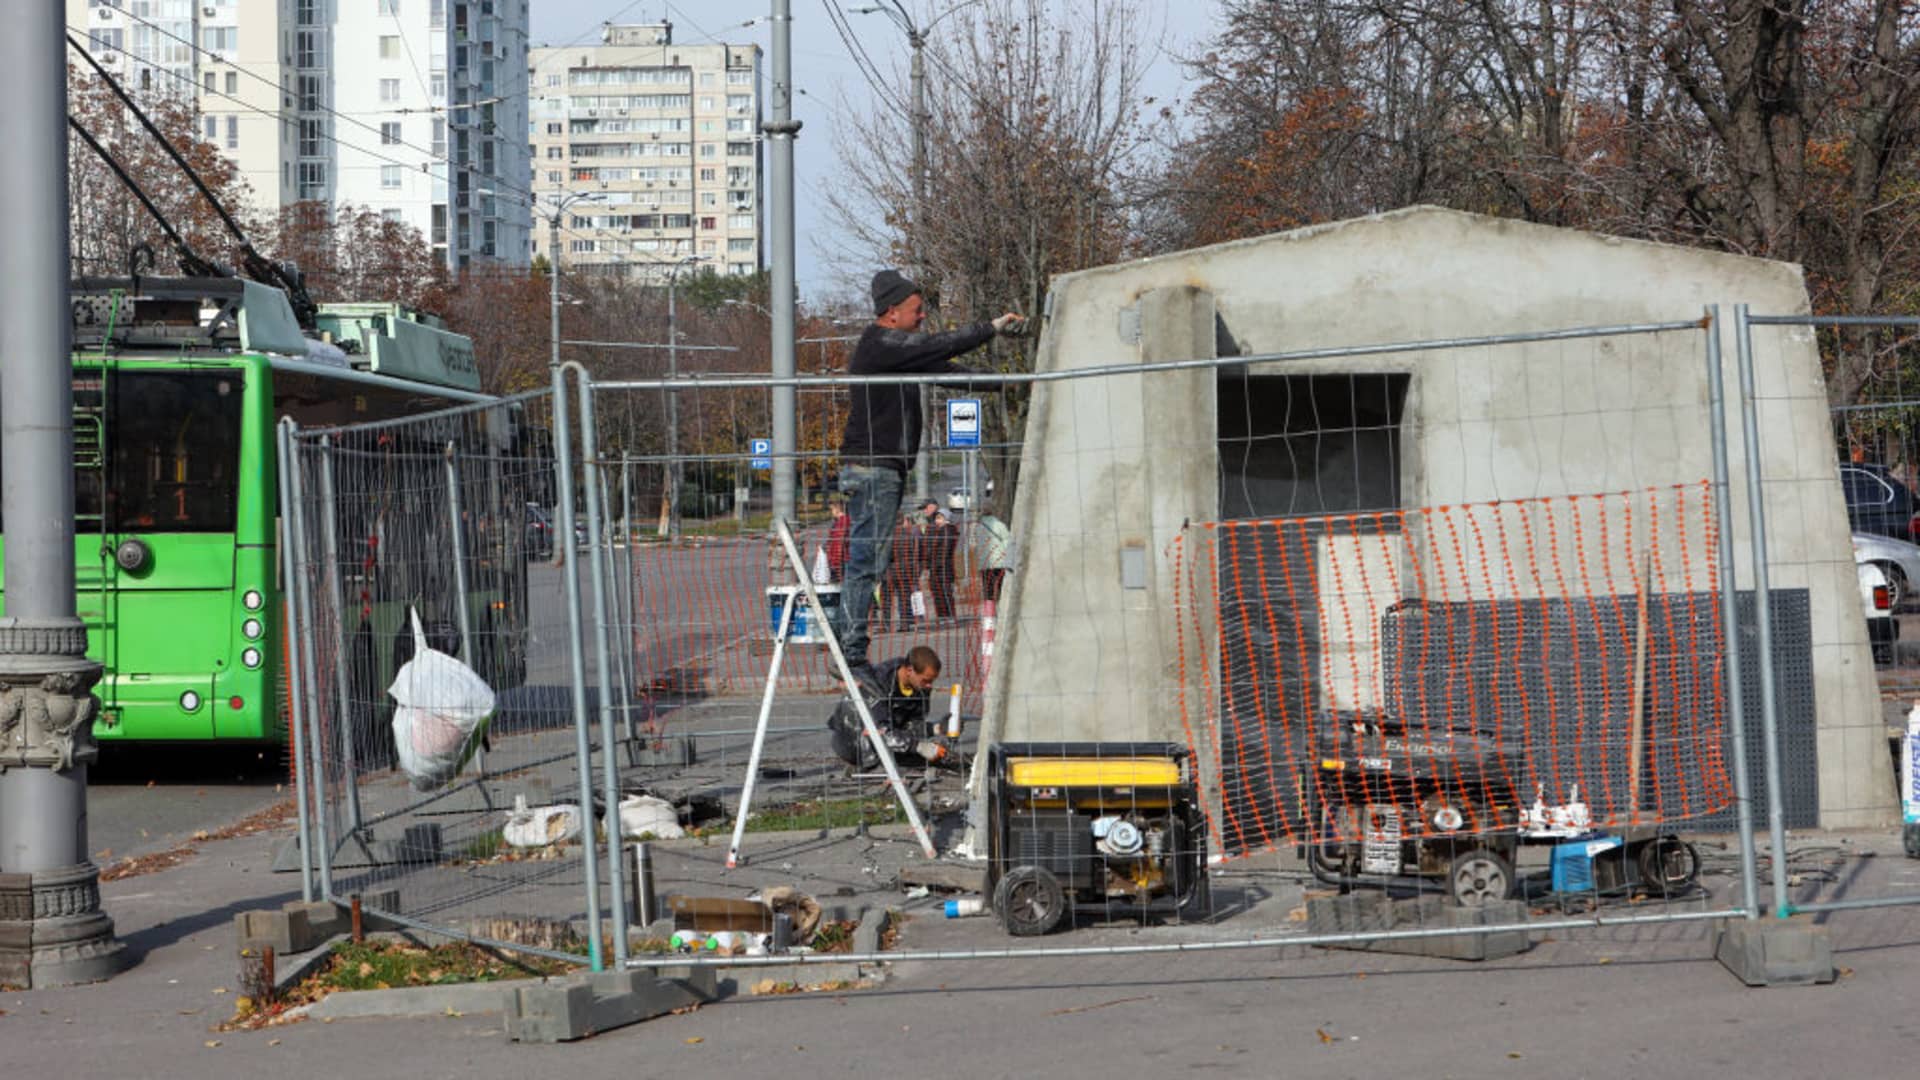 A concrete bomb shelter set next to one of the bus stops, Kharkiv, norheastern Ukraine. 